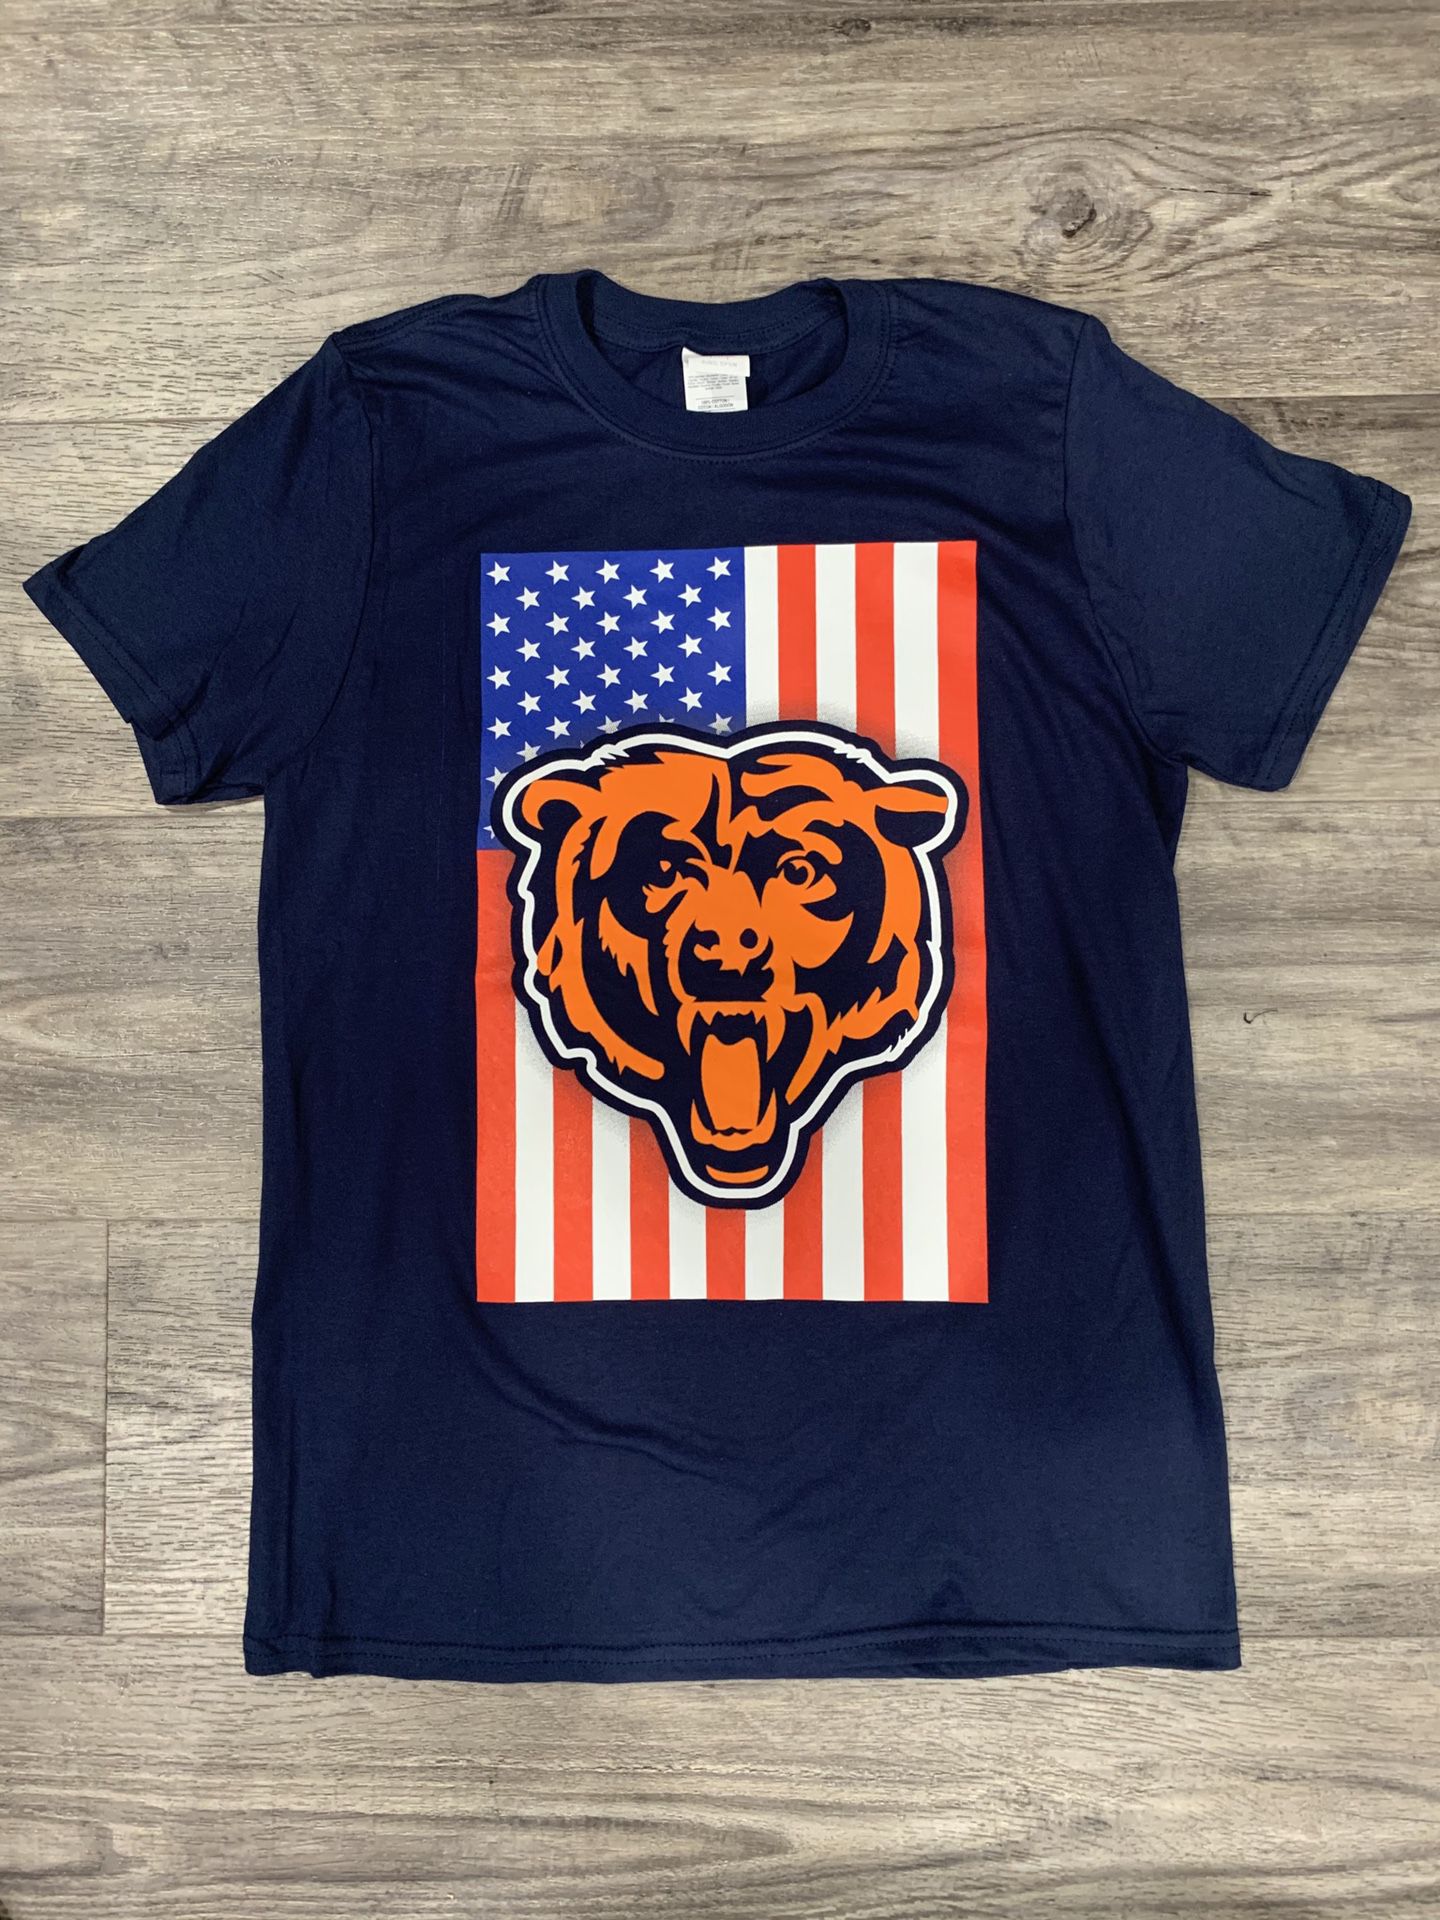 Chicago bears T-shirts , Cubs ,white Sox,bears,bulls, blackhawks ,Chicago,Chicago flag,America ,4th of July,American flag, USA,tools,garage,sports,spo